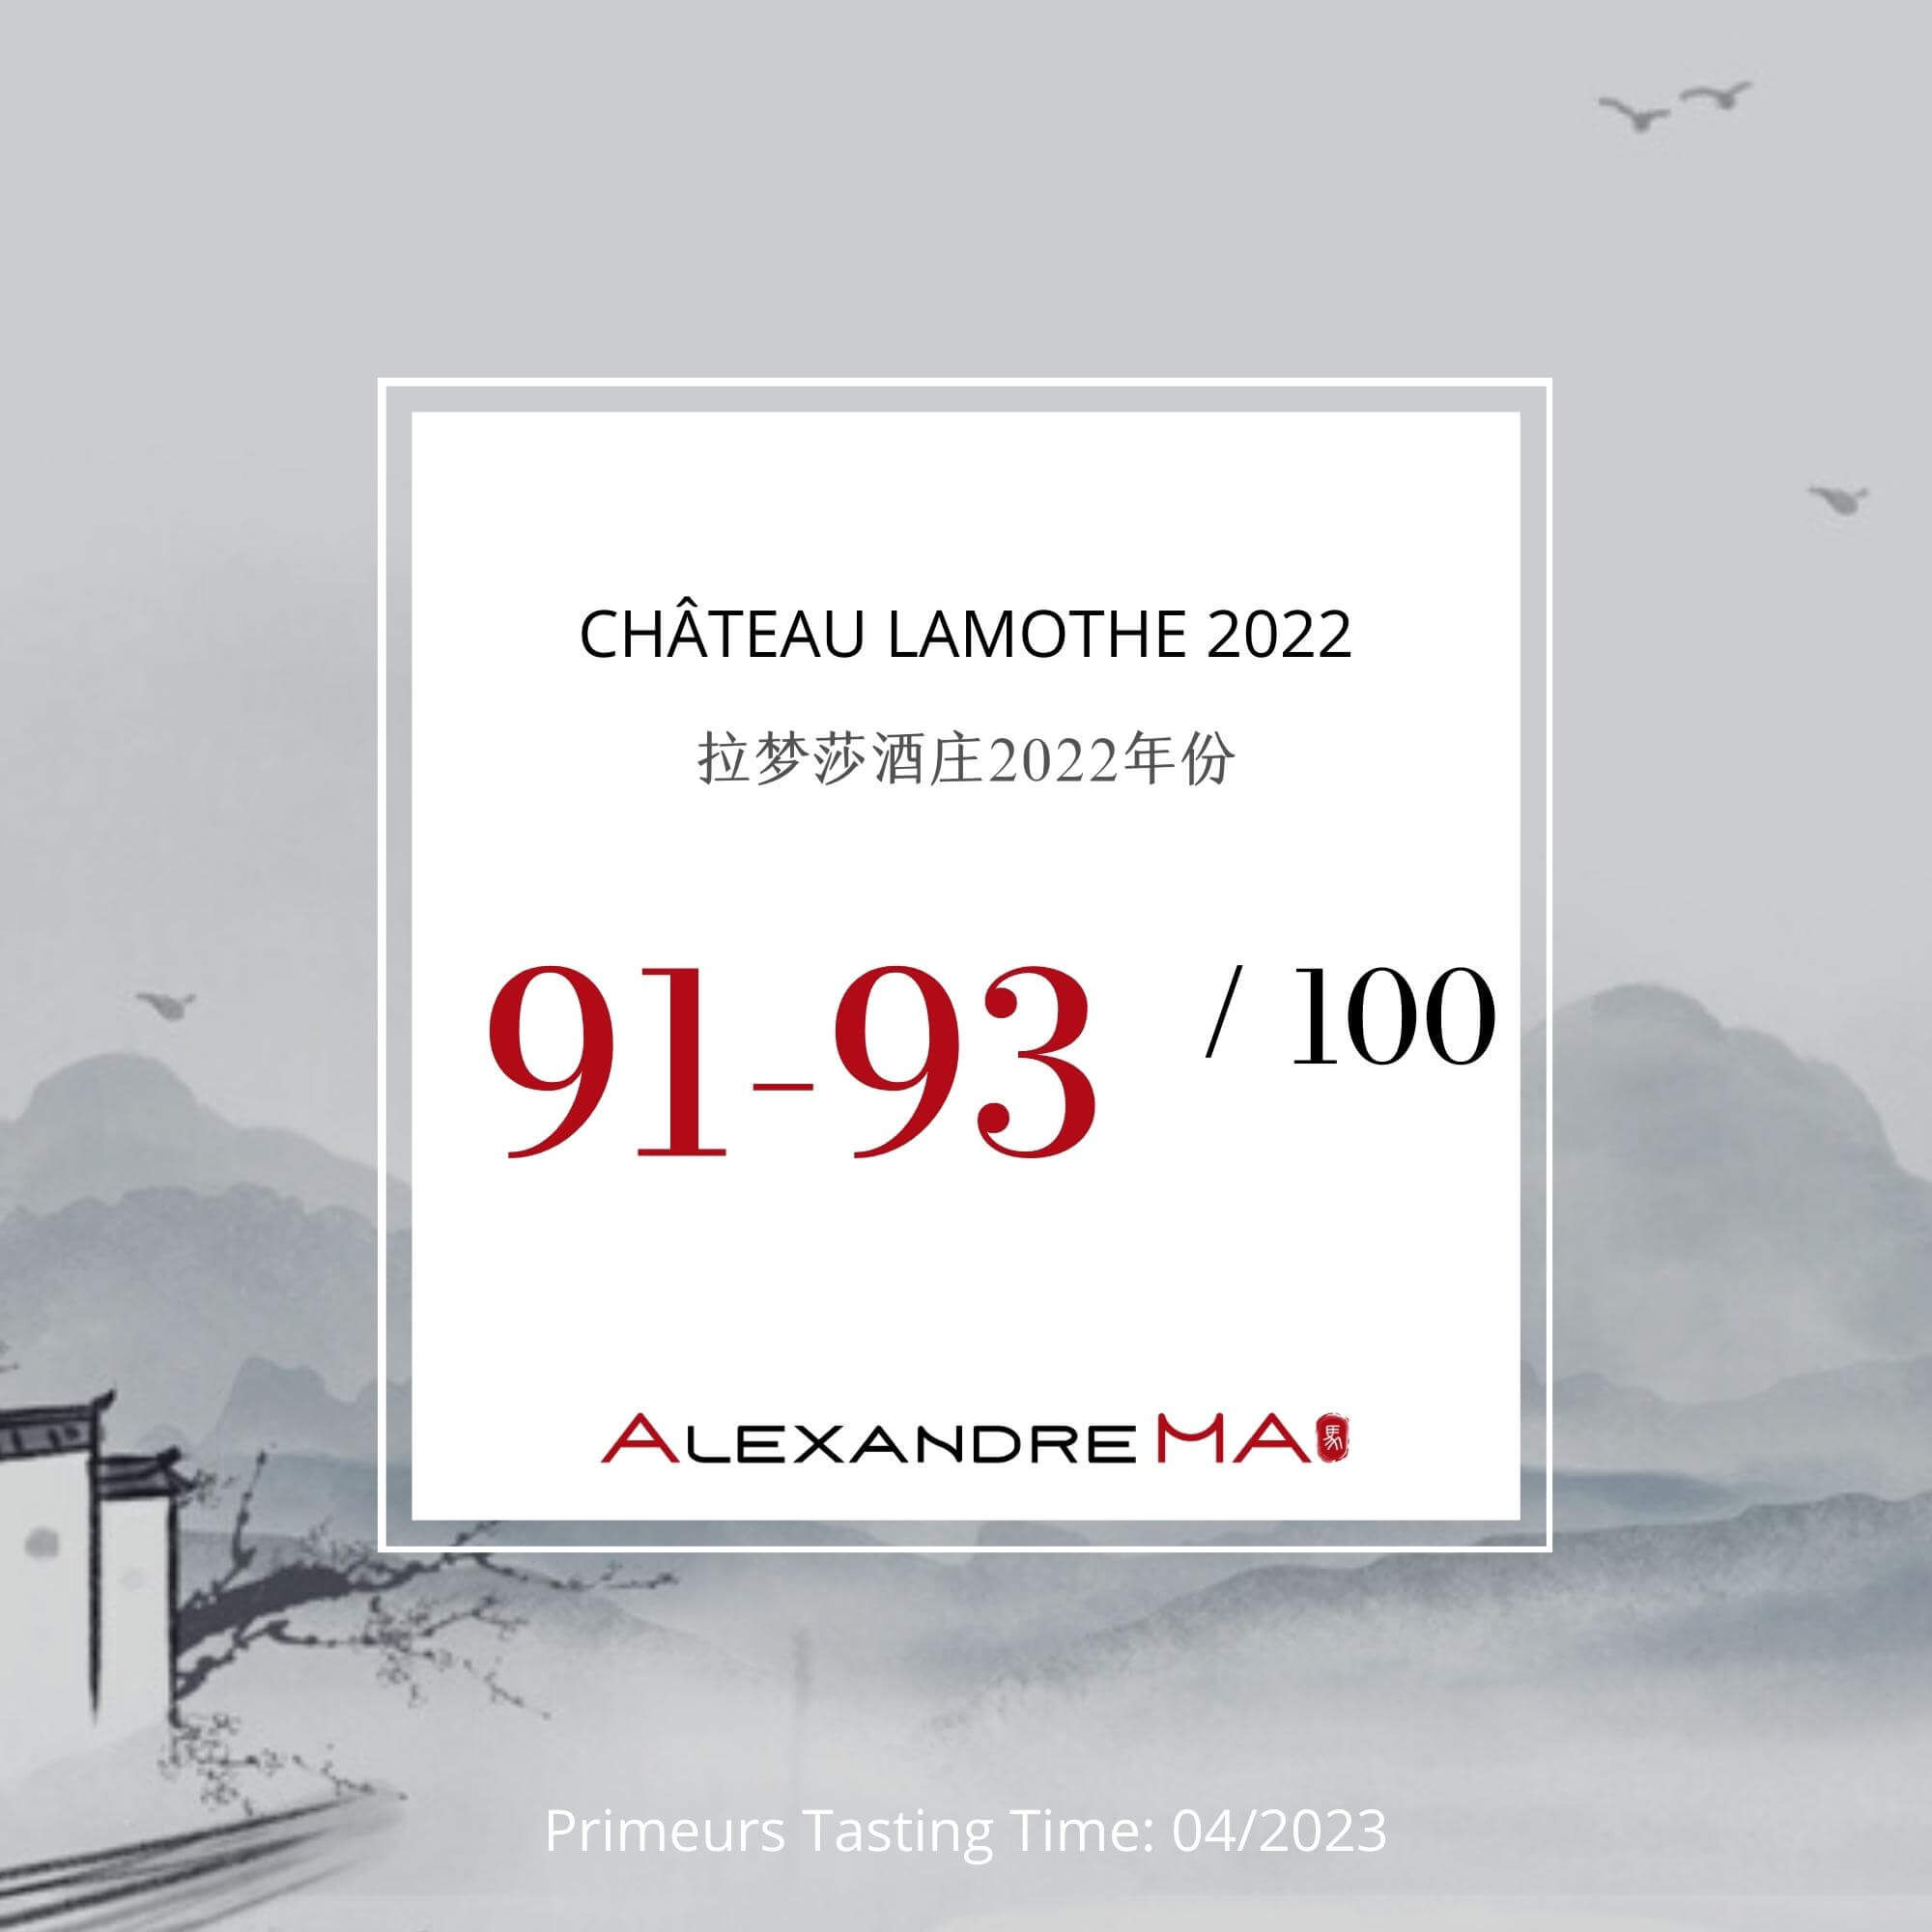 Château Lamothe 2022 Primeurs - Alexandre MA